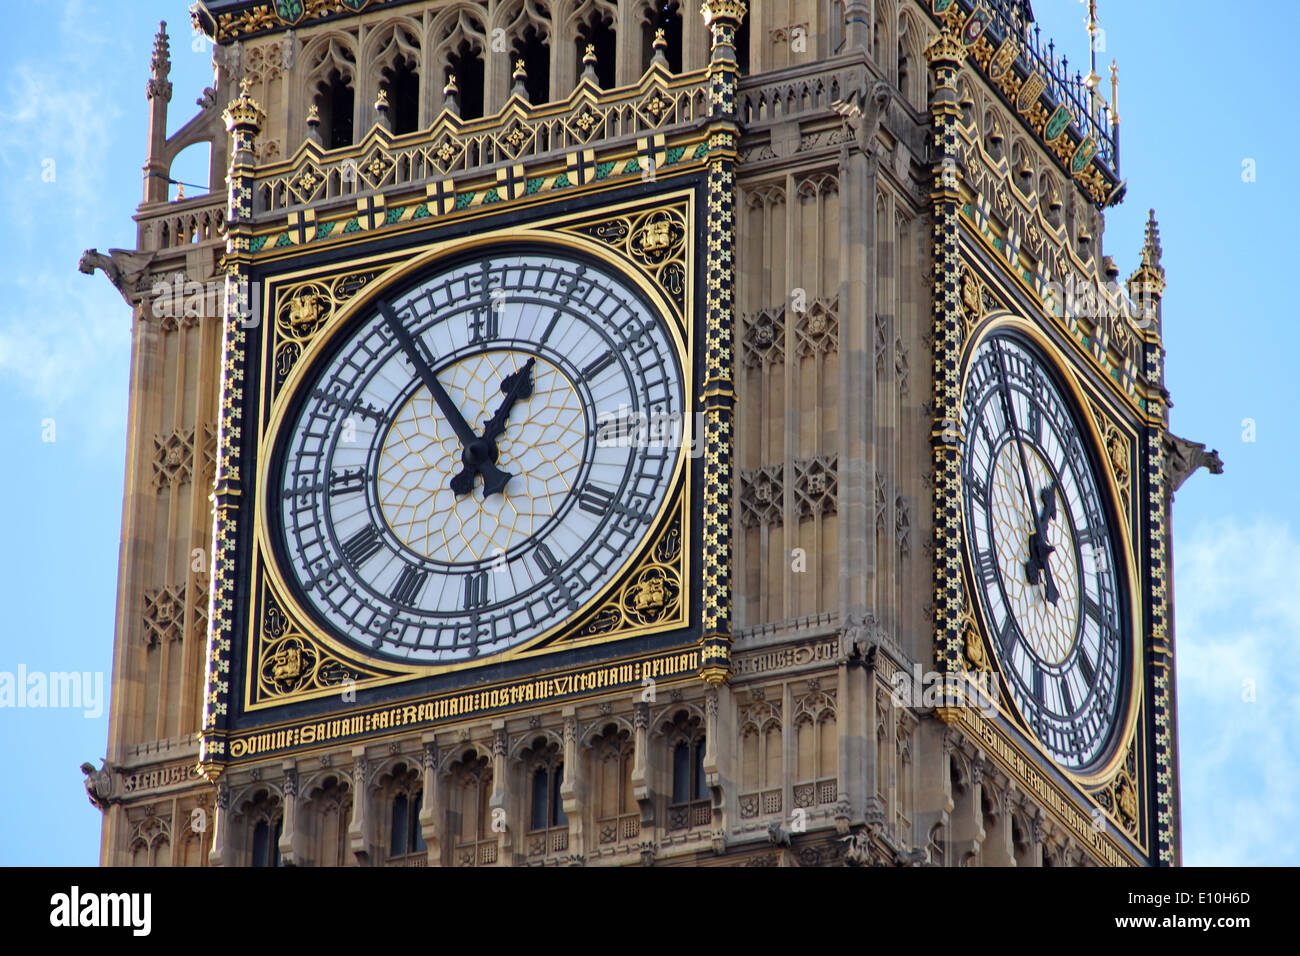 London: Dial of Big Ben (Elizabeth Tower) Stock Photo